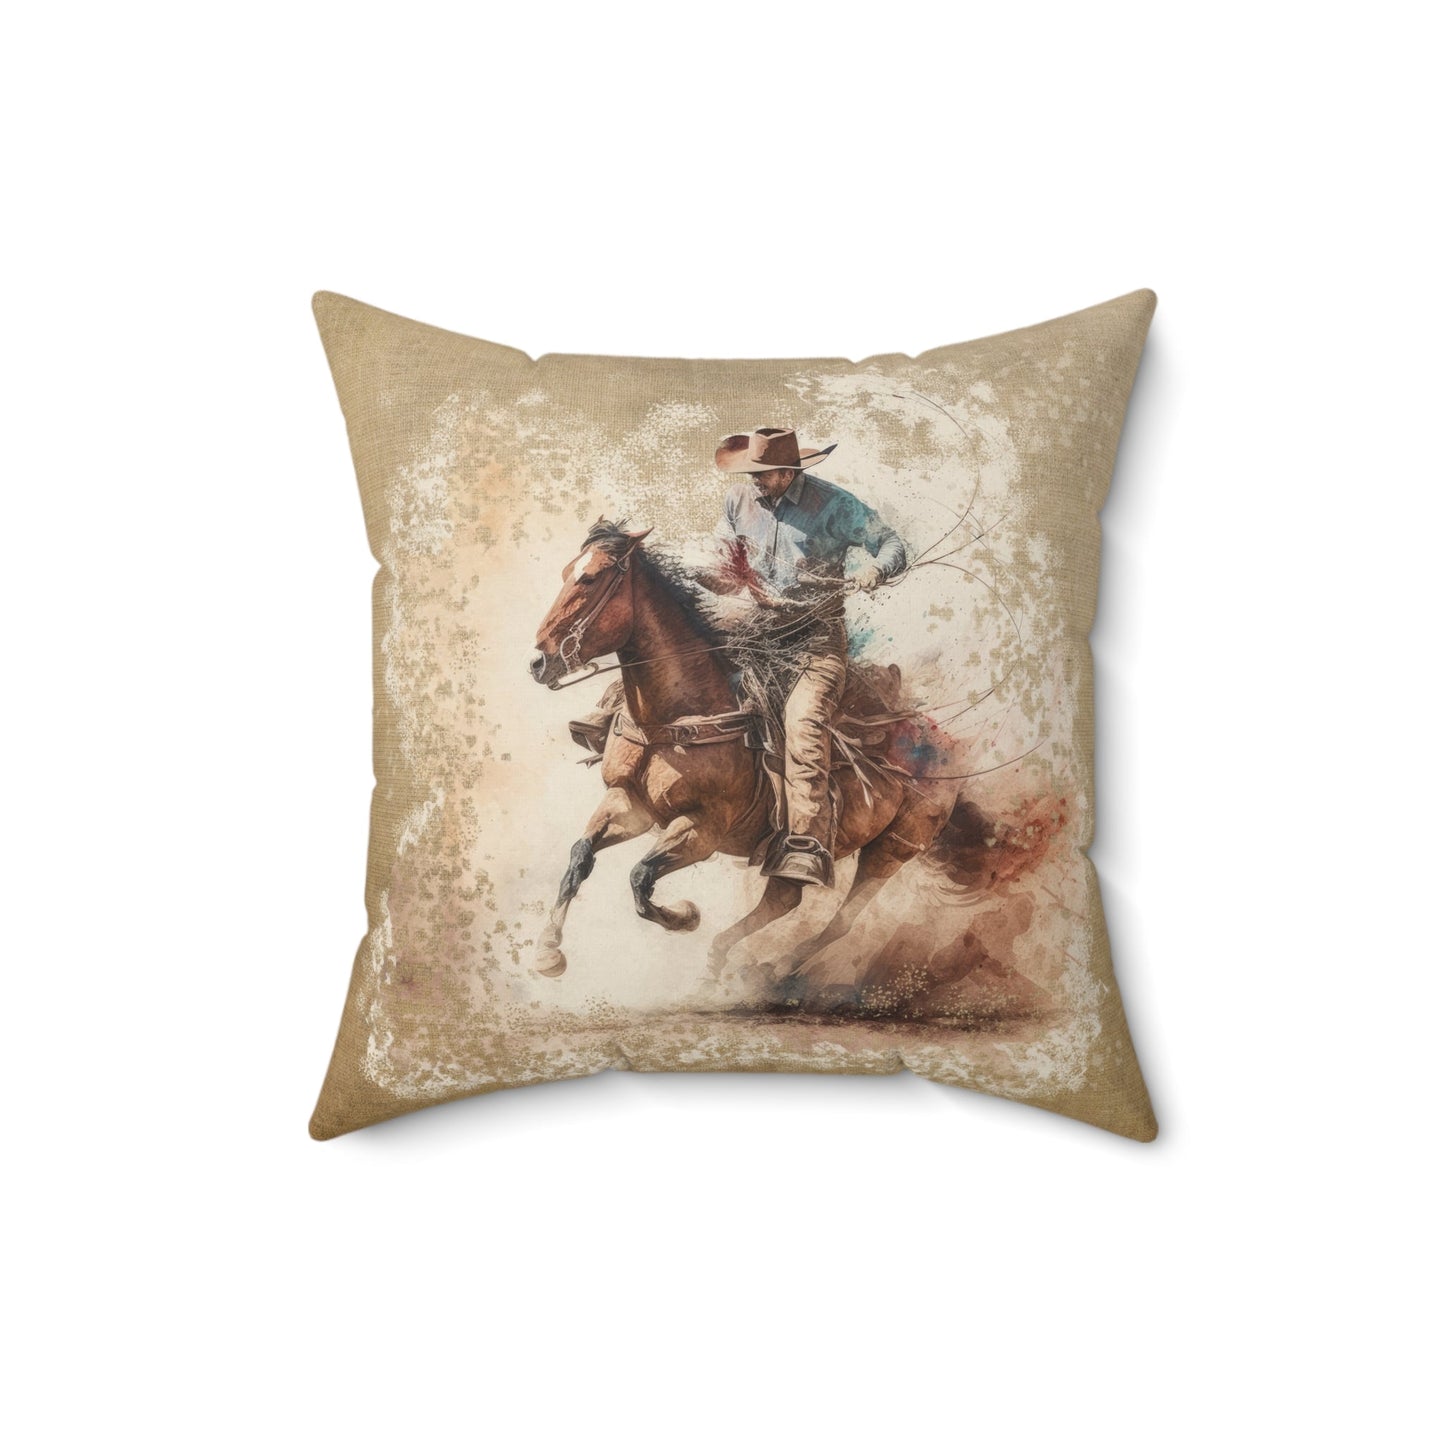 Lone Galloping Horse Rider Decorative Pillow | Original Watercolor Art | Indoor Throw Pillow Decor - FlooredByArt